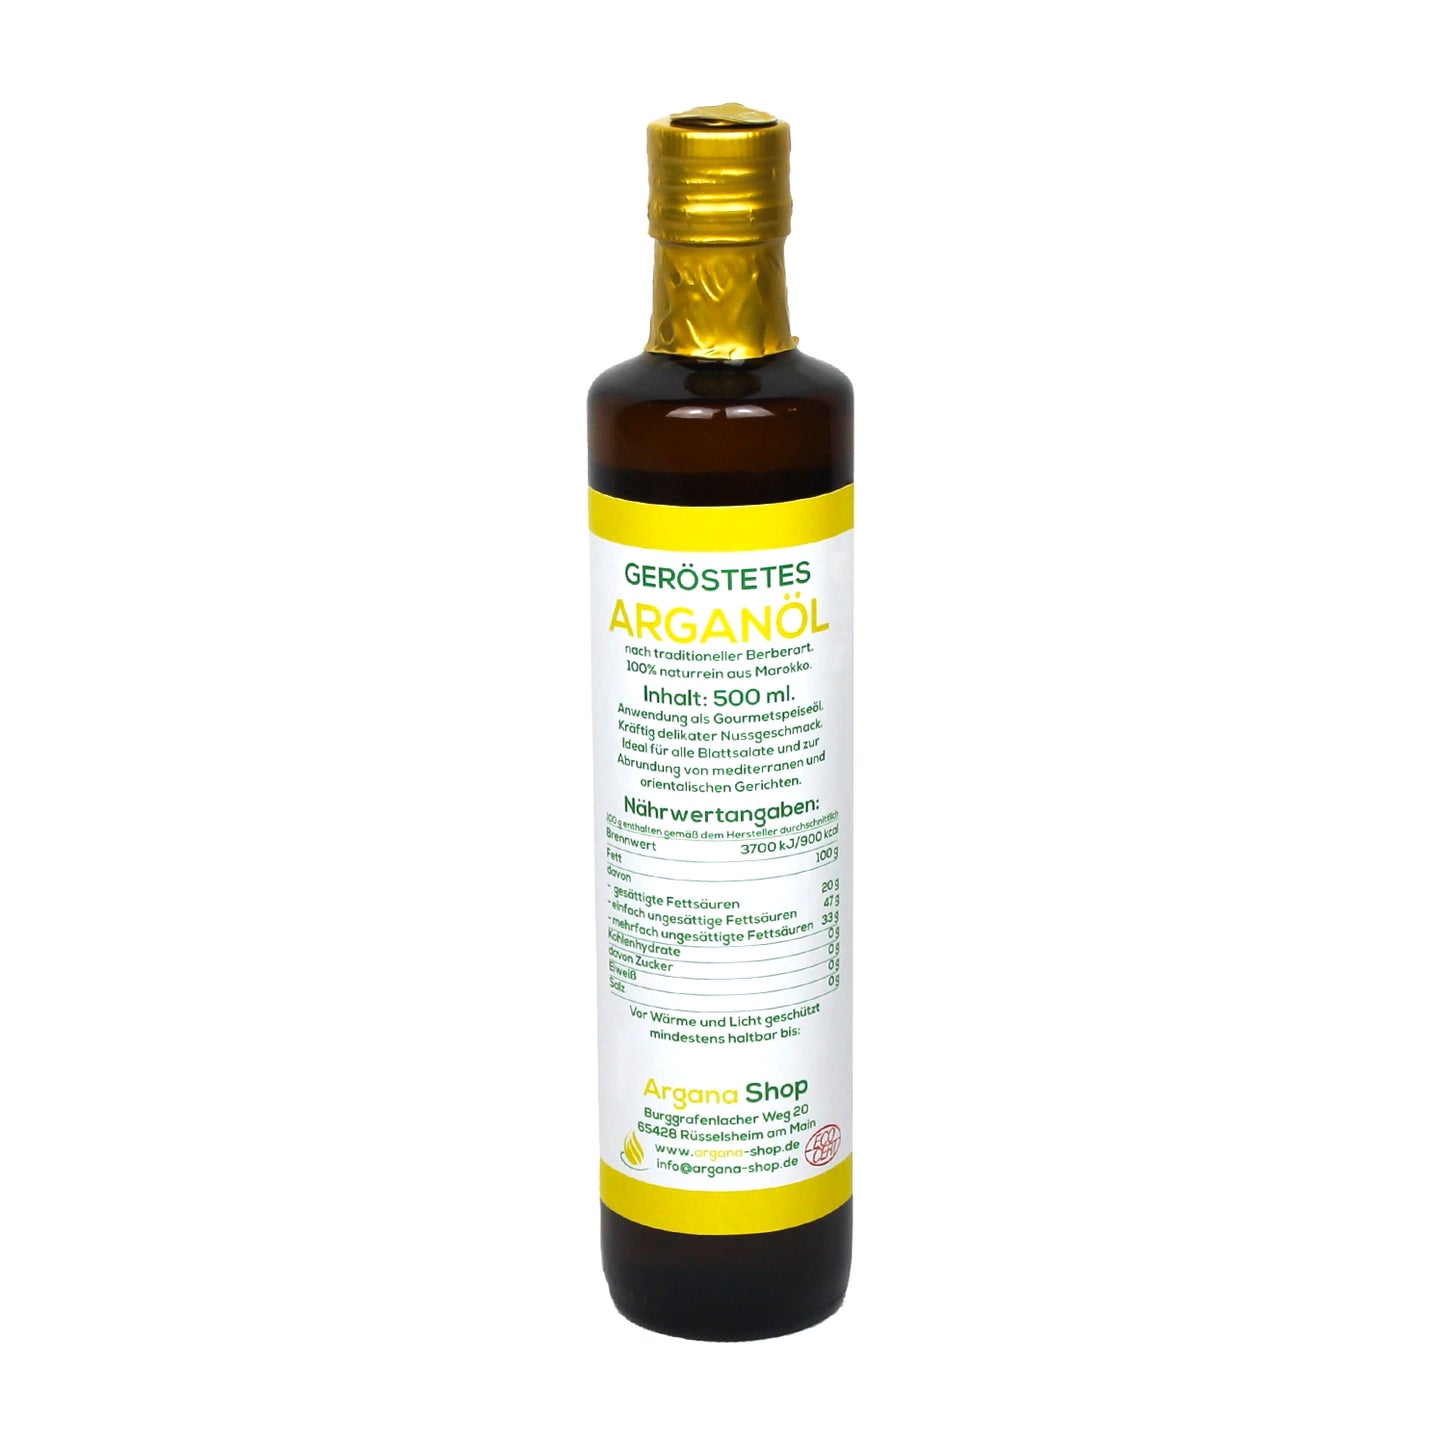 Arganöl, geröstet (große Flasche 500 ml)